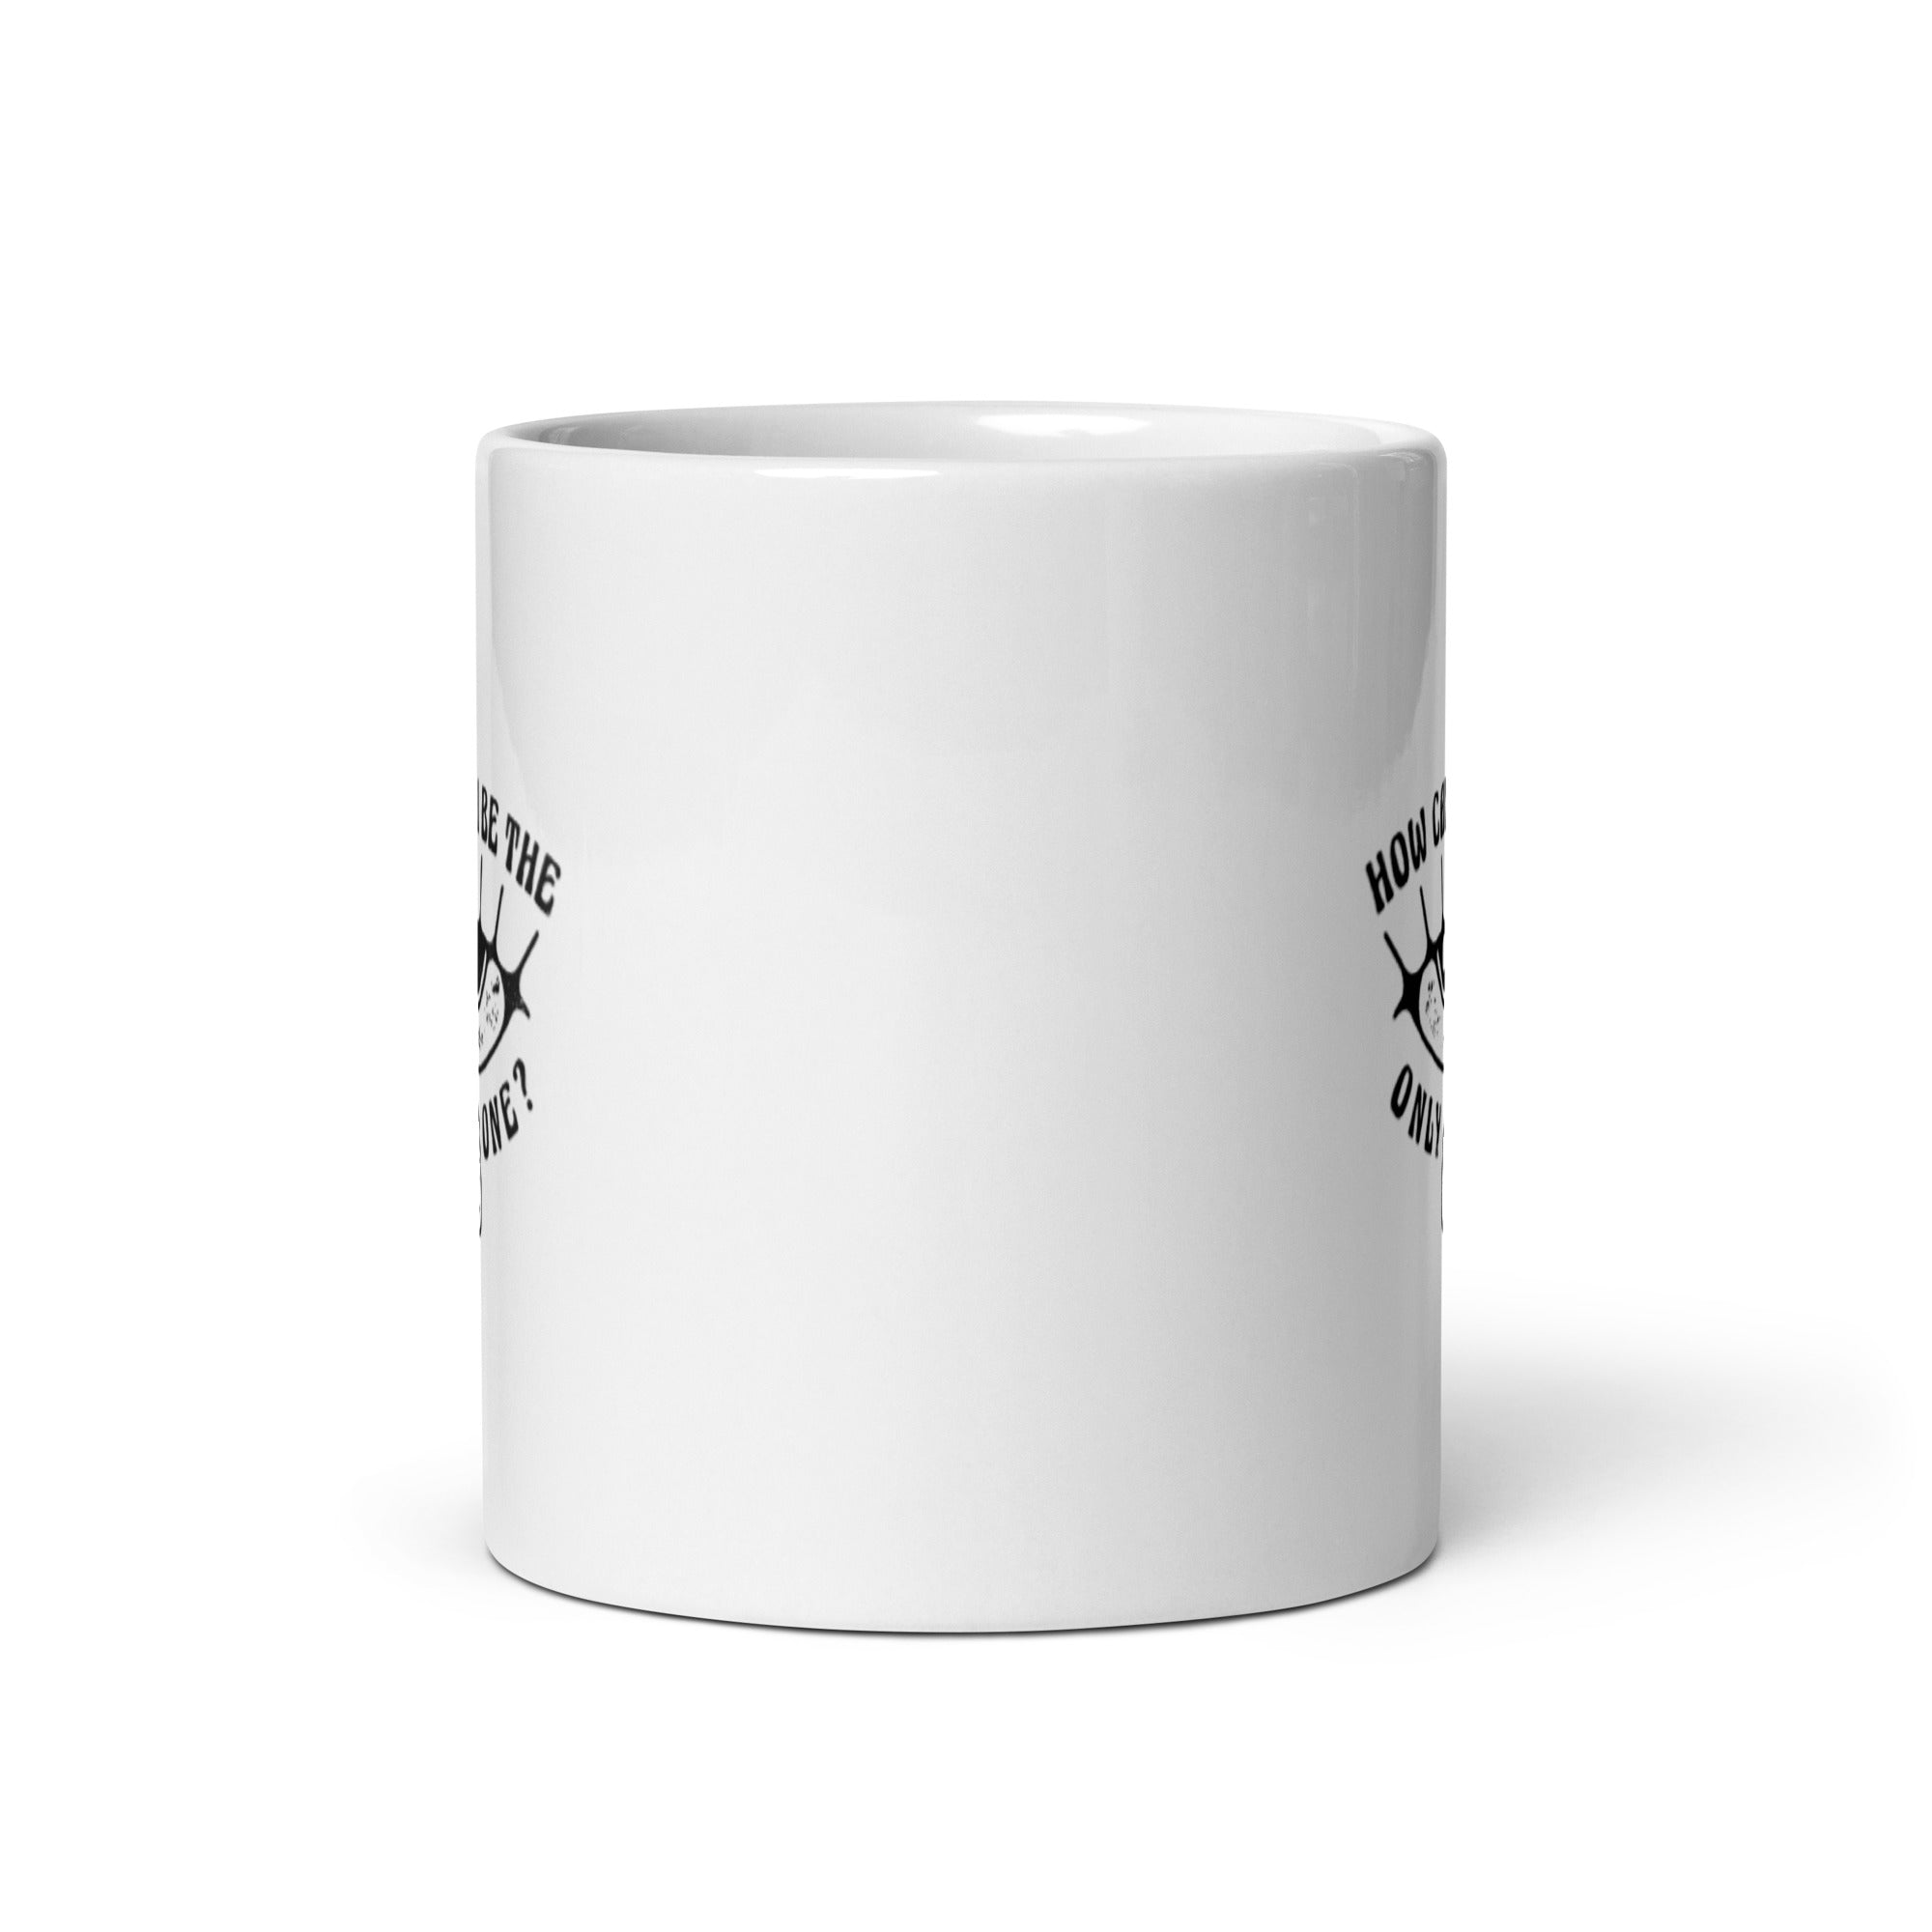 Only One All-Seeing Eye - White glossy mug